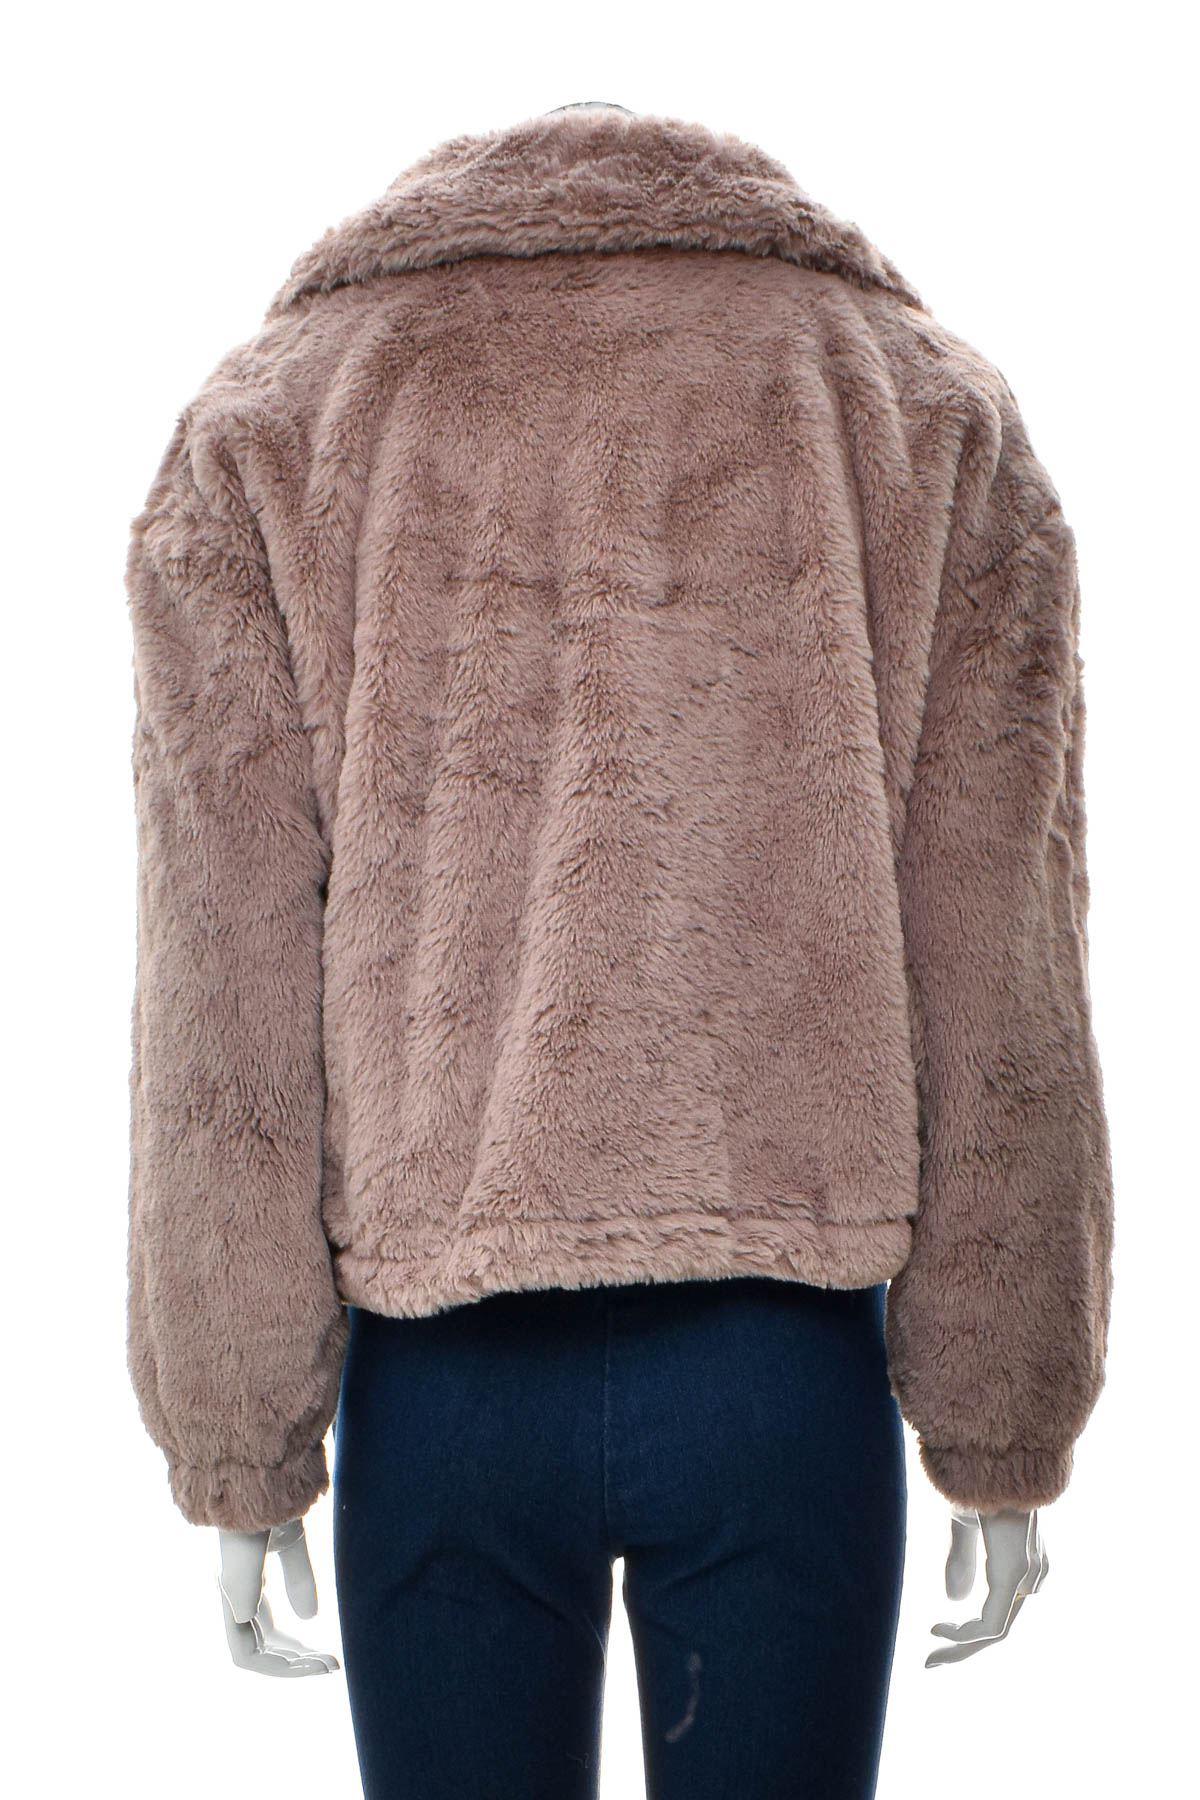 Women's coat - Ally fashion - 1